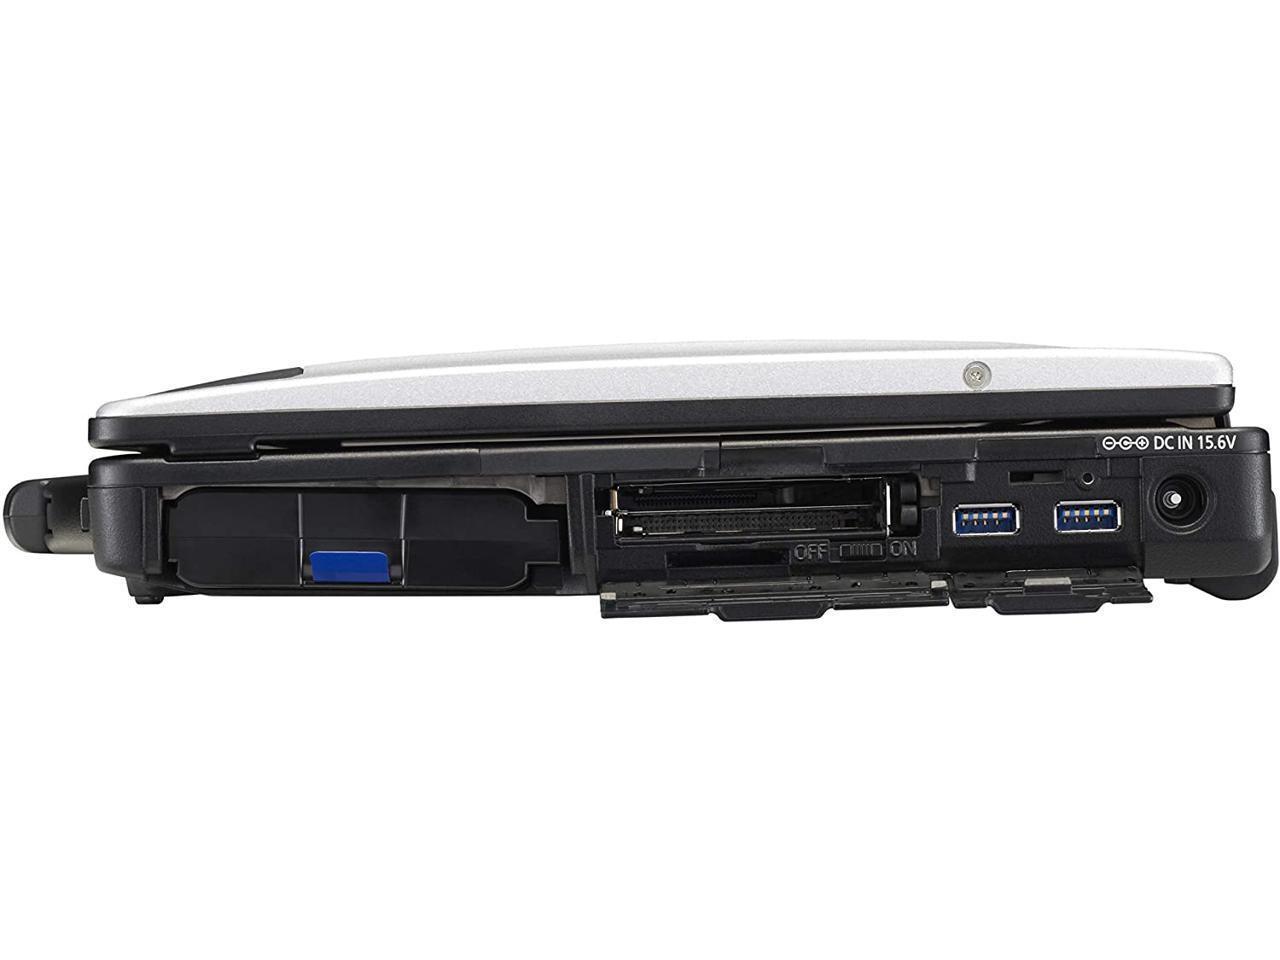 Panasonic Toughbook CF-53 MK4, Semi Rugged Laptop, 14